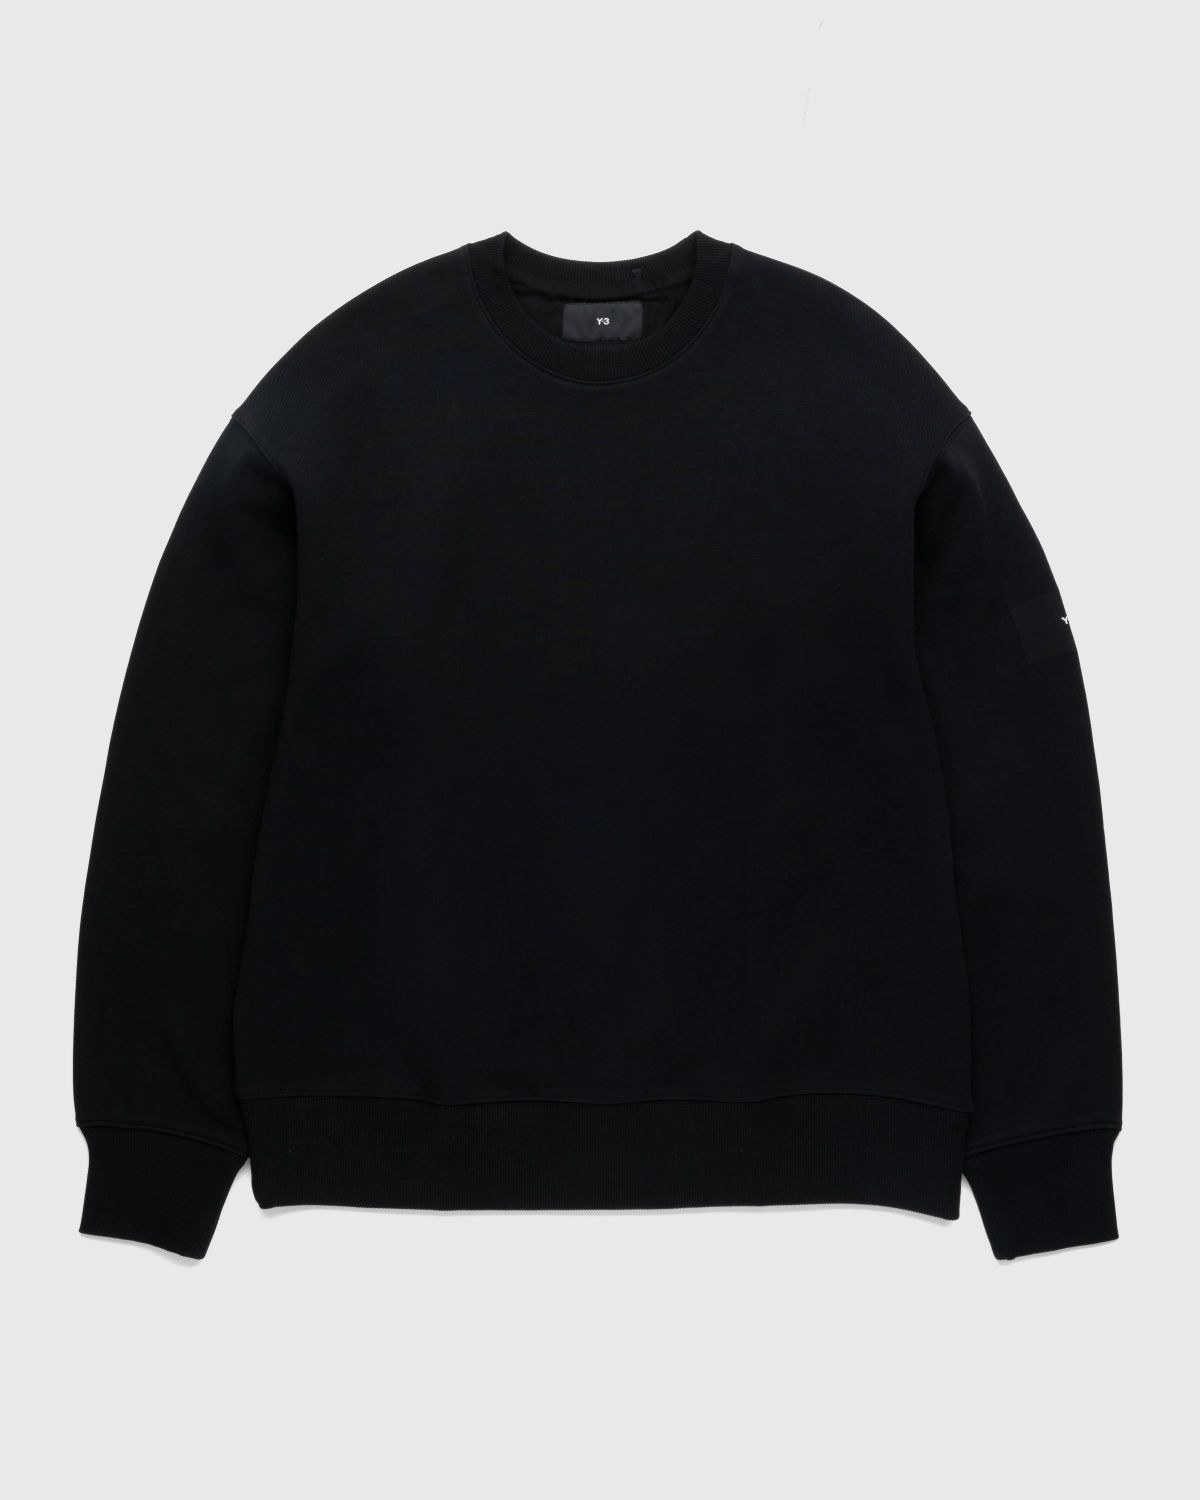 Y-3 – FT Crew Sweatshirt Black - Sweatshirts - Black - Image 1